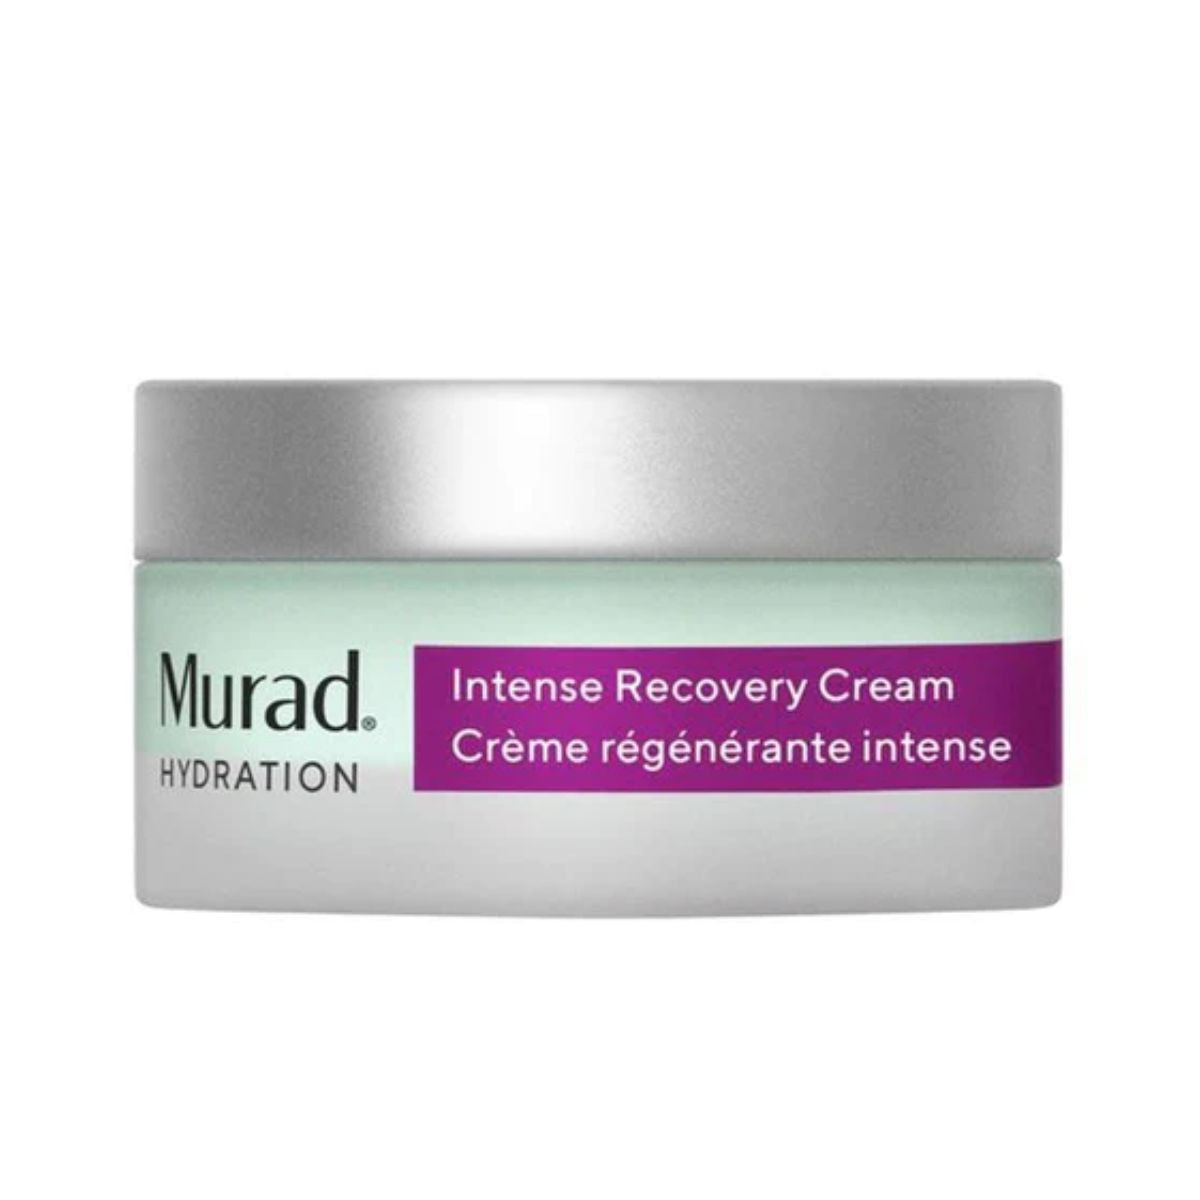 Murad Intense Recovery Cream Sustainable Edit.